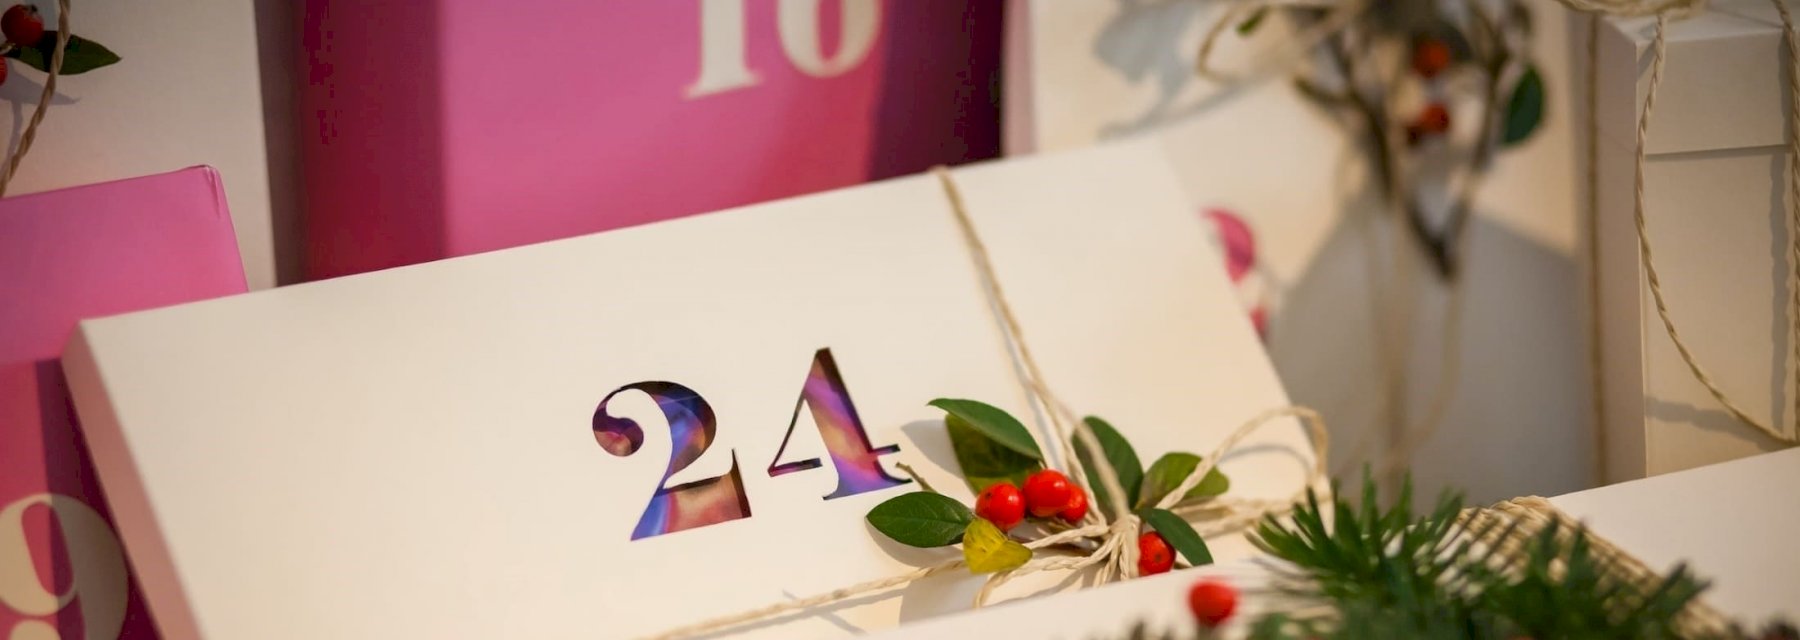 Advent calendars: Superb surprises behind every door